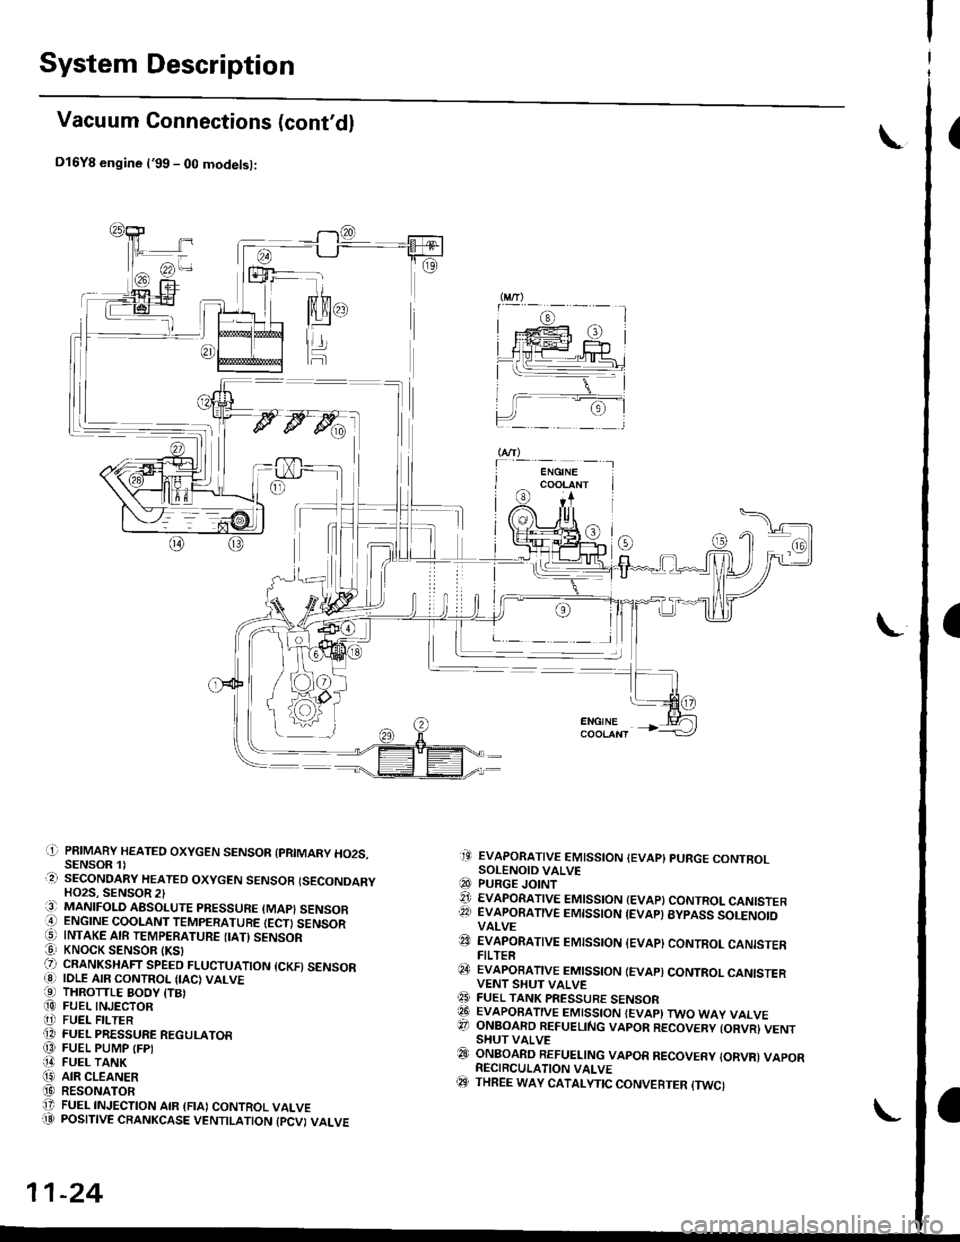 HONDA CIVIC 1999 6.G Owners Guide System Description
Vacuum Connections (contdl
D16Y8 engine l99 - 00 modetsl:
(]-i PAIMARY HEATEO OXYGEN SENSOR {PRIMARY HO2S,SENSOR 1)..2r SECONOARY HEATEO OXycEN SENSOB ISECONDARYHO2S, SENSOR 2li3)